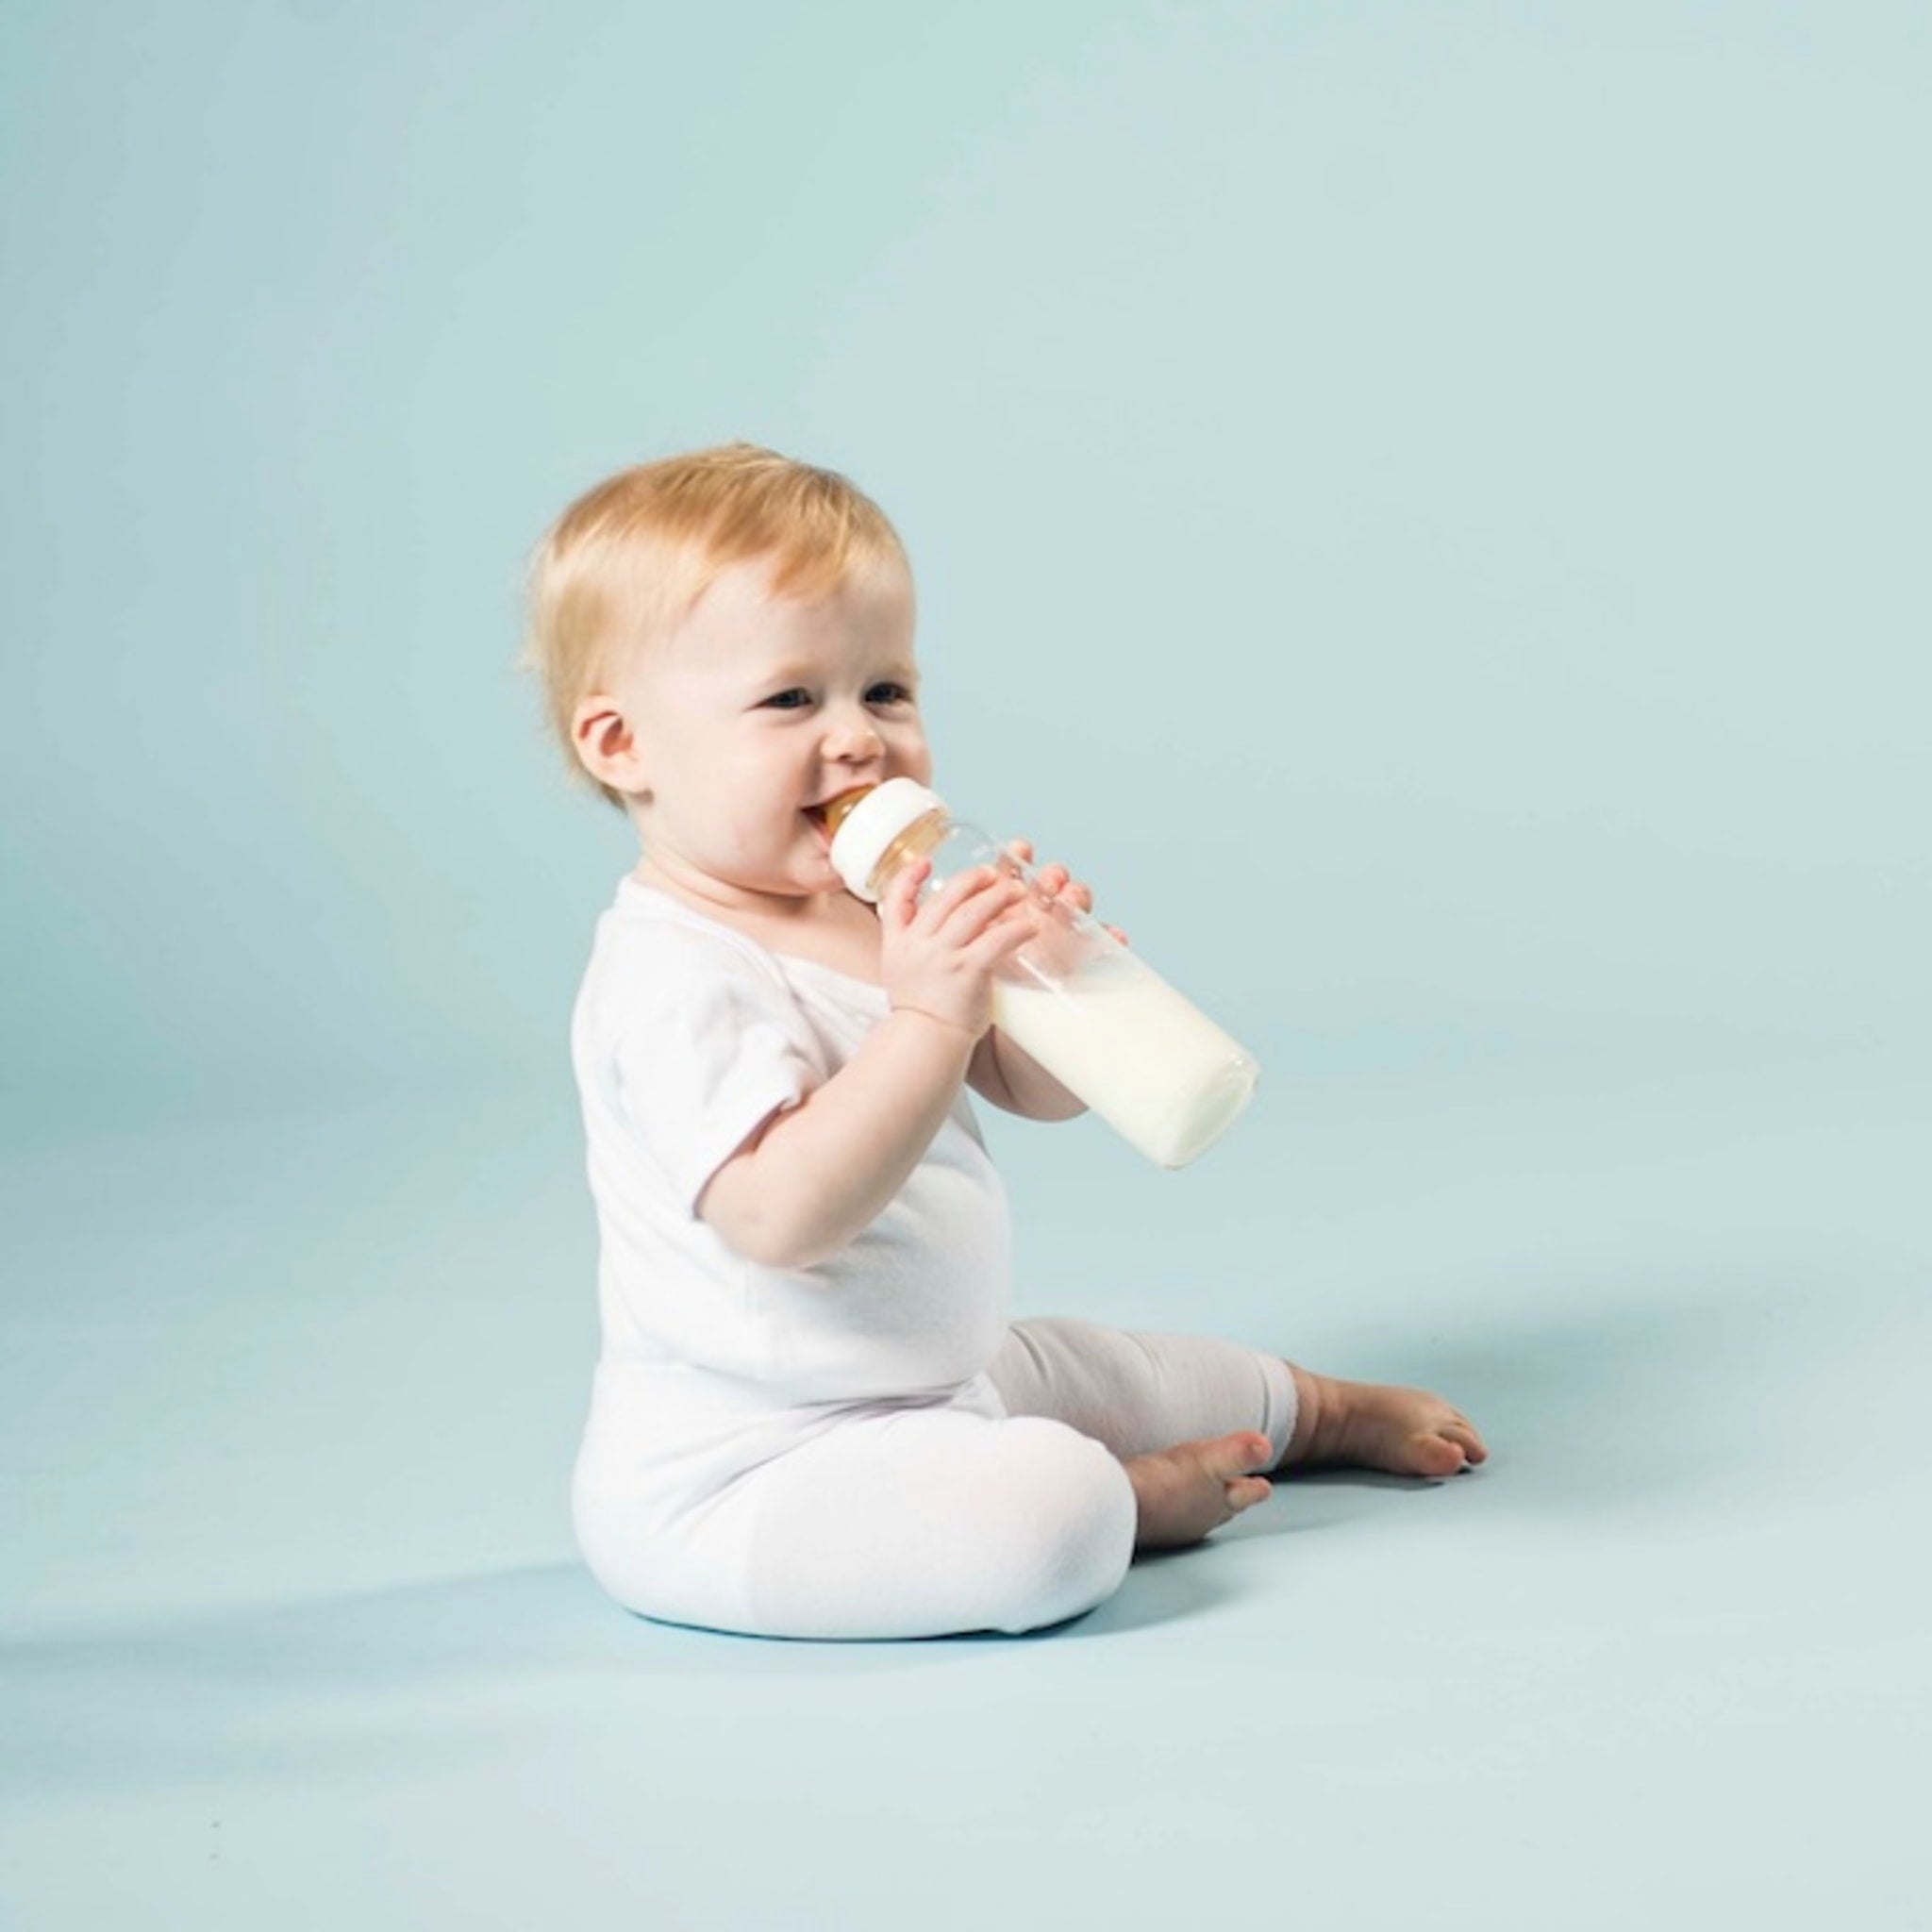  Baby Bottle-Feeding Supplies - Baby Bottle-Feeding